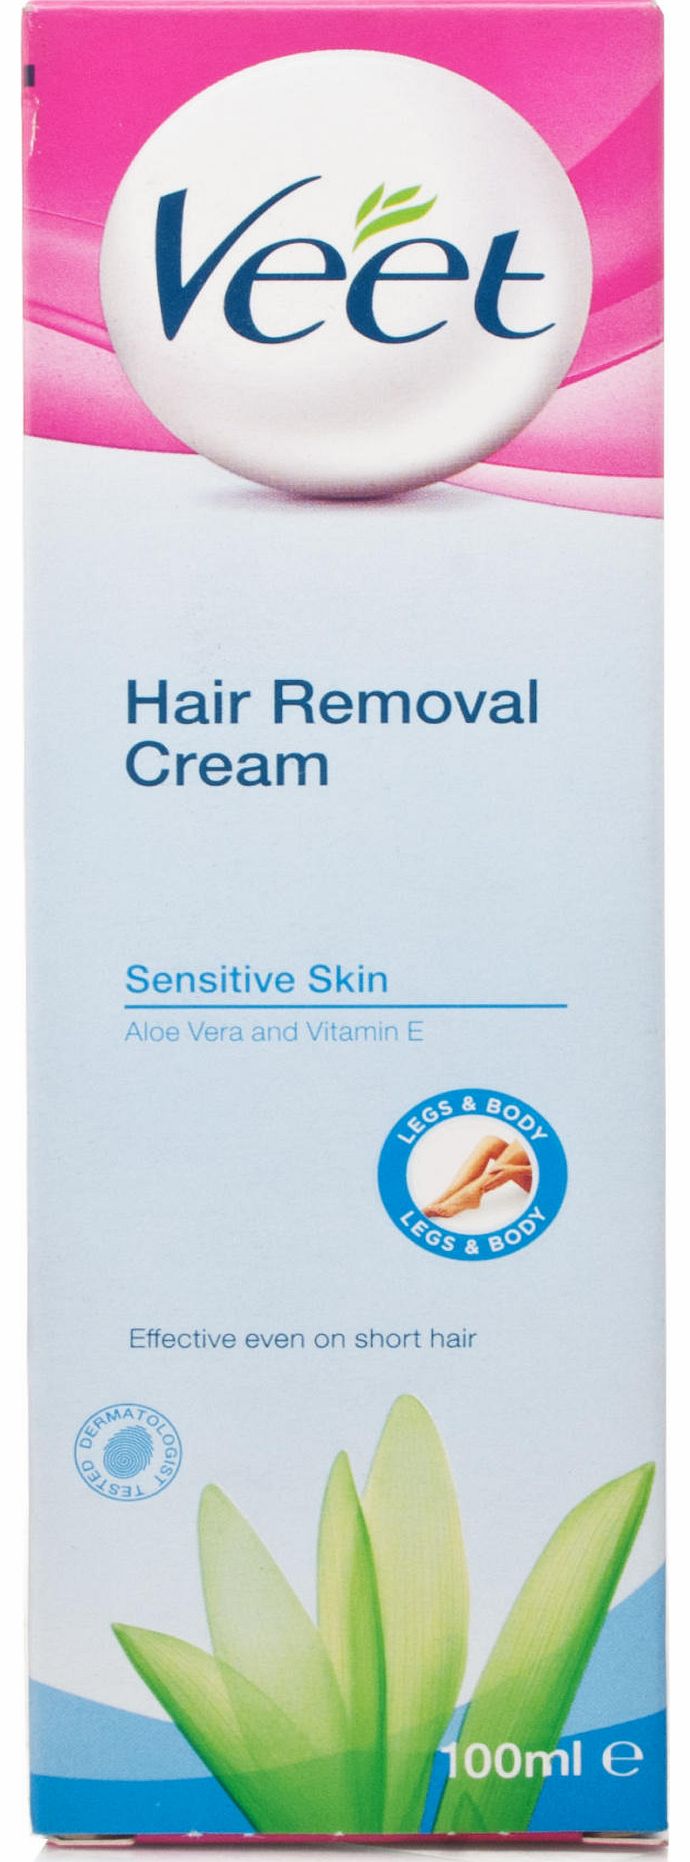 Veet 5 Minute Hair Removal Cream for Sensitive